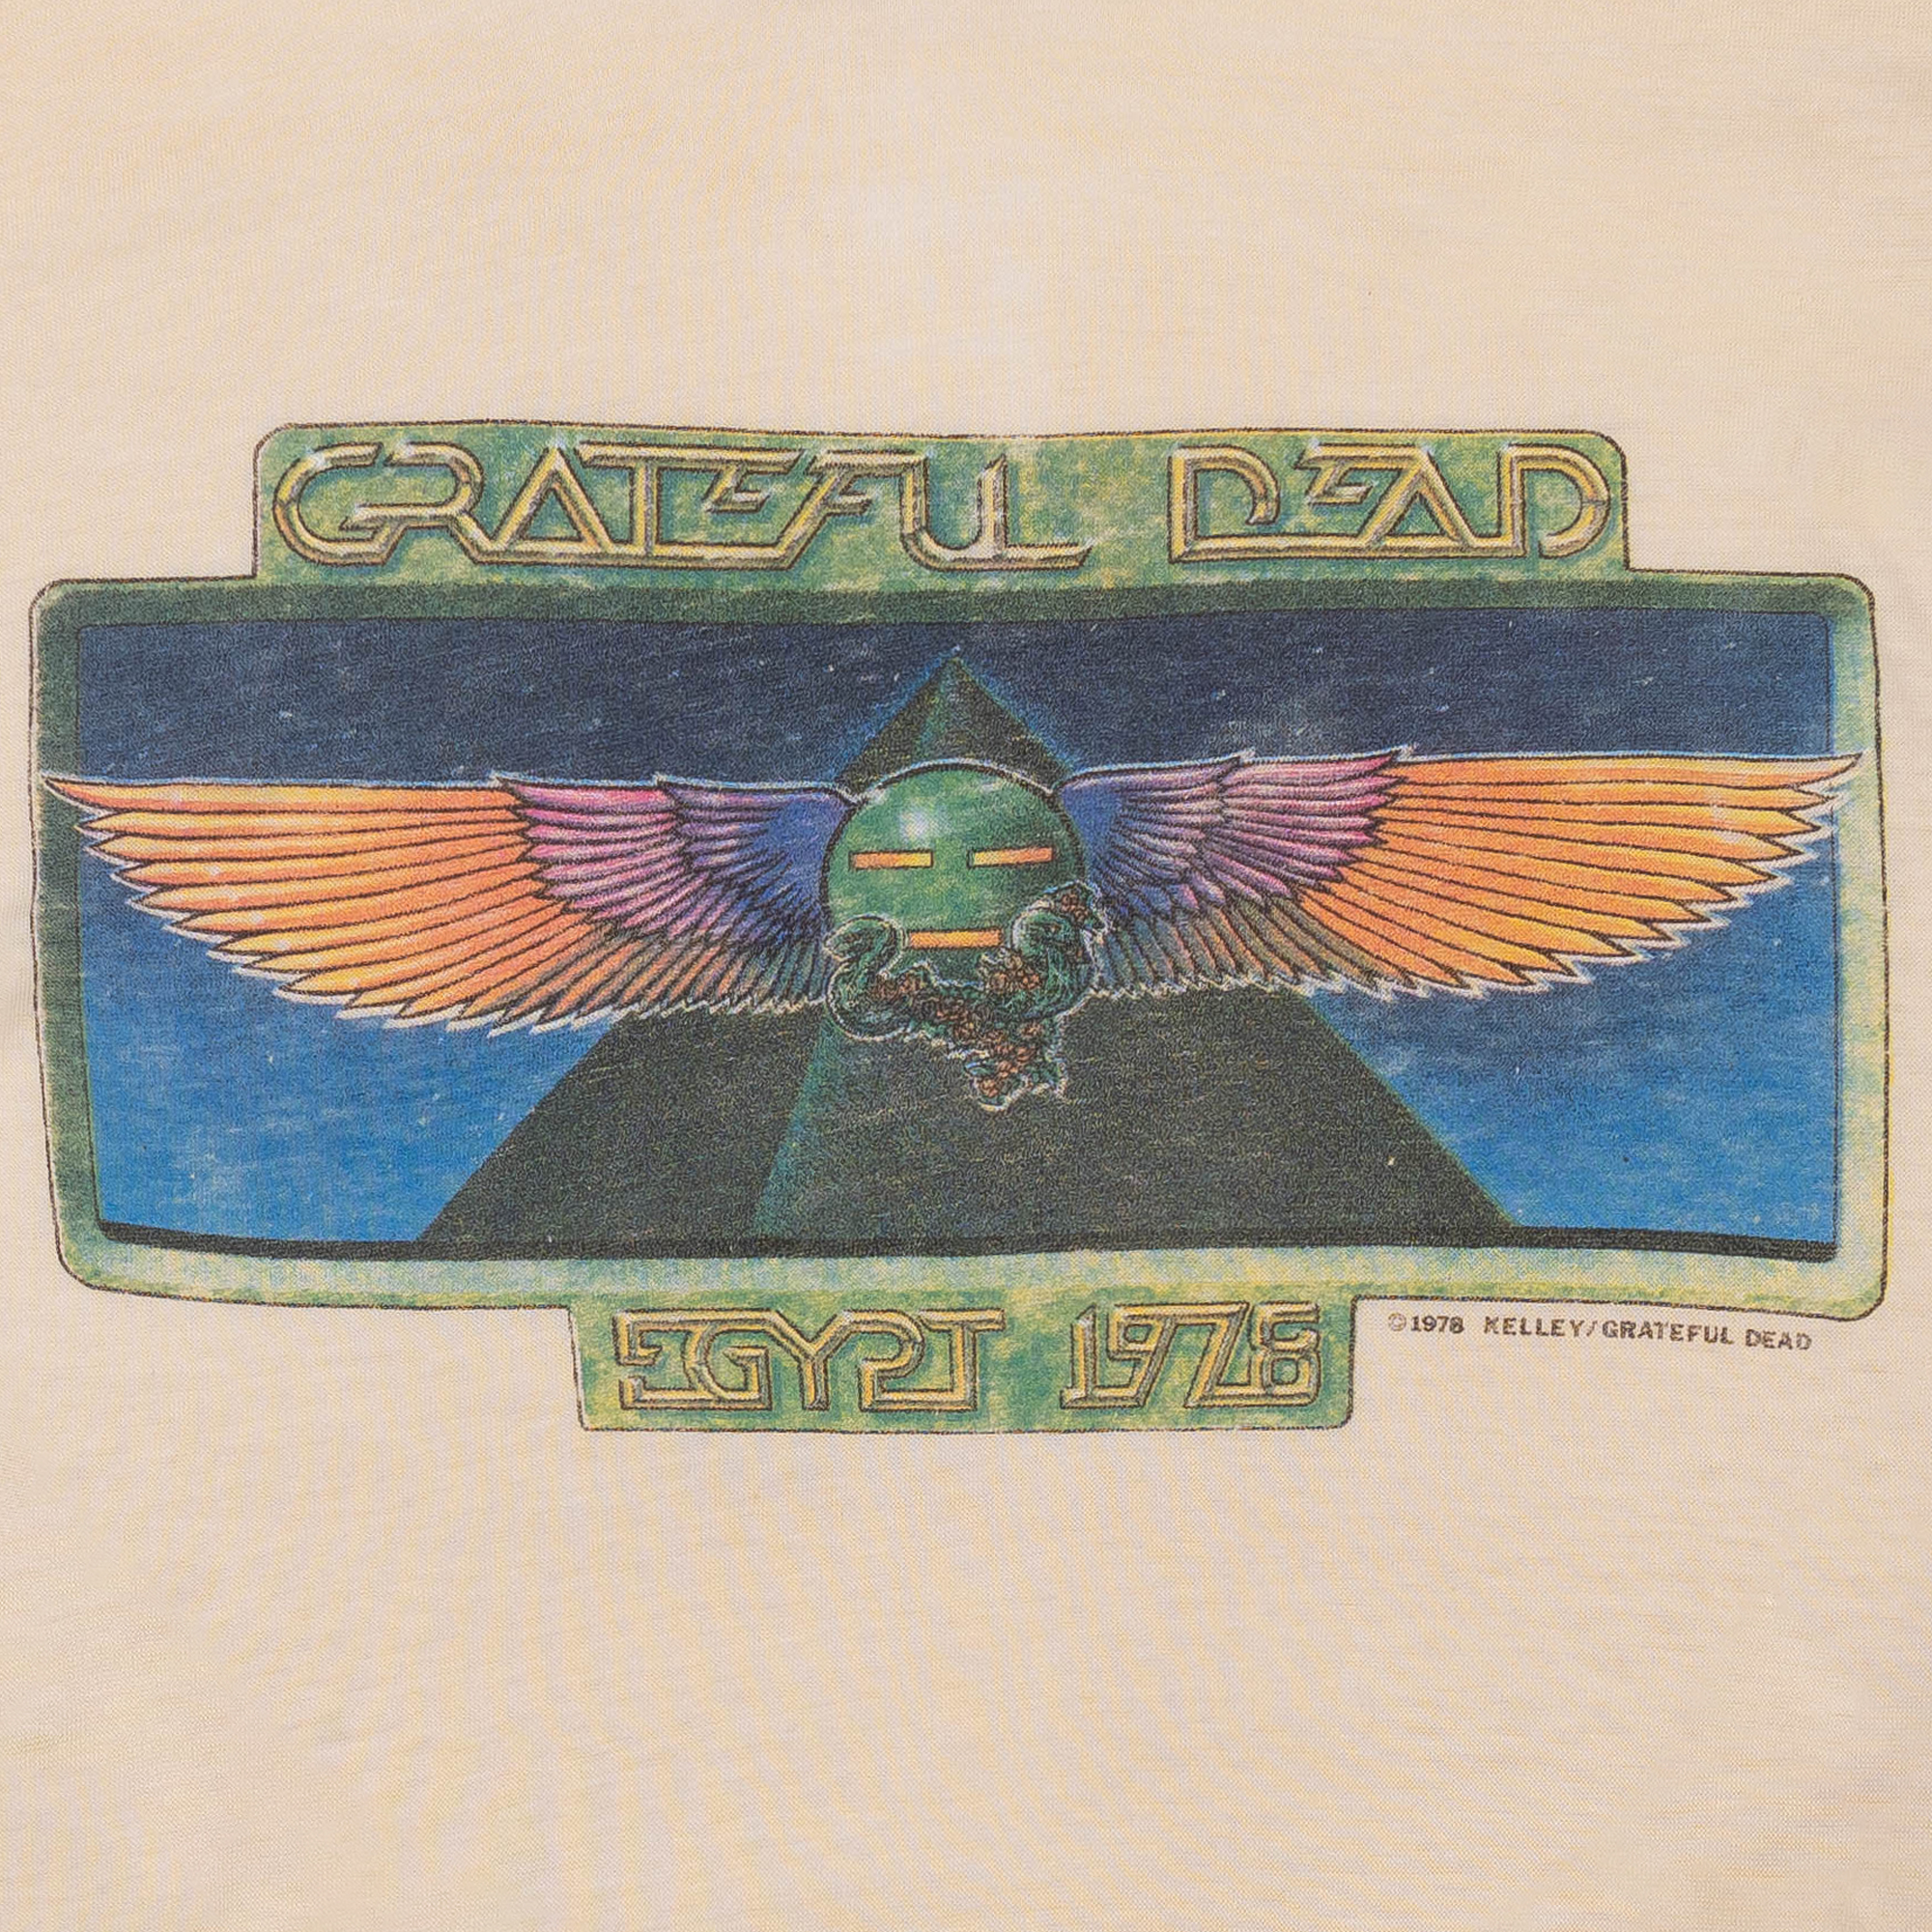 Grateful Dead "Egypt" 1978 Tee Cream-PLUS